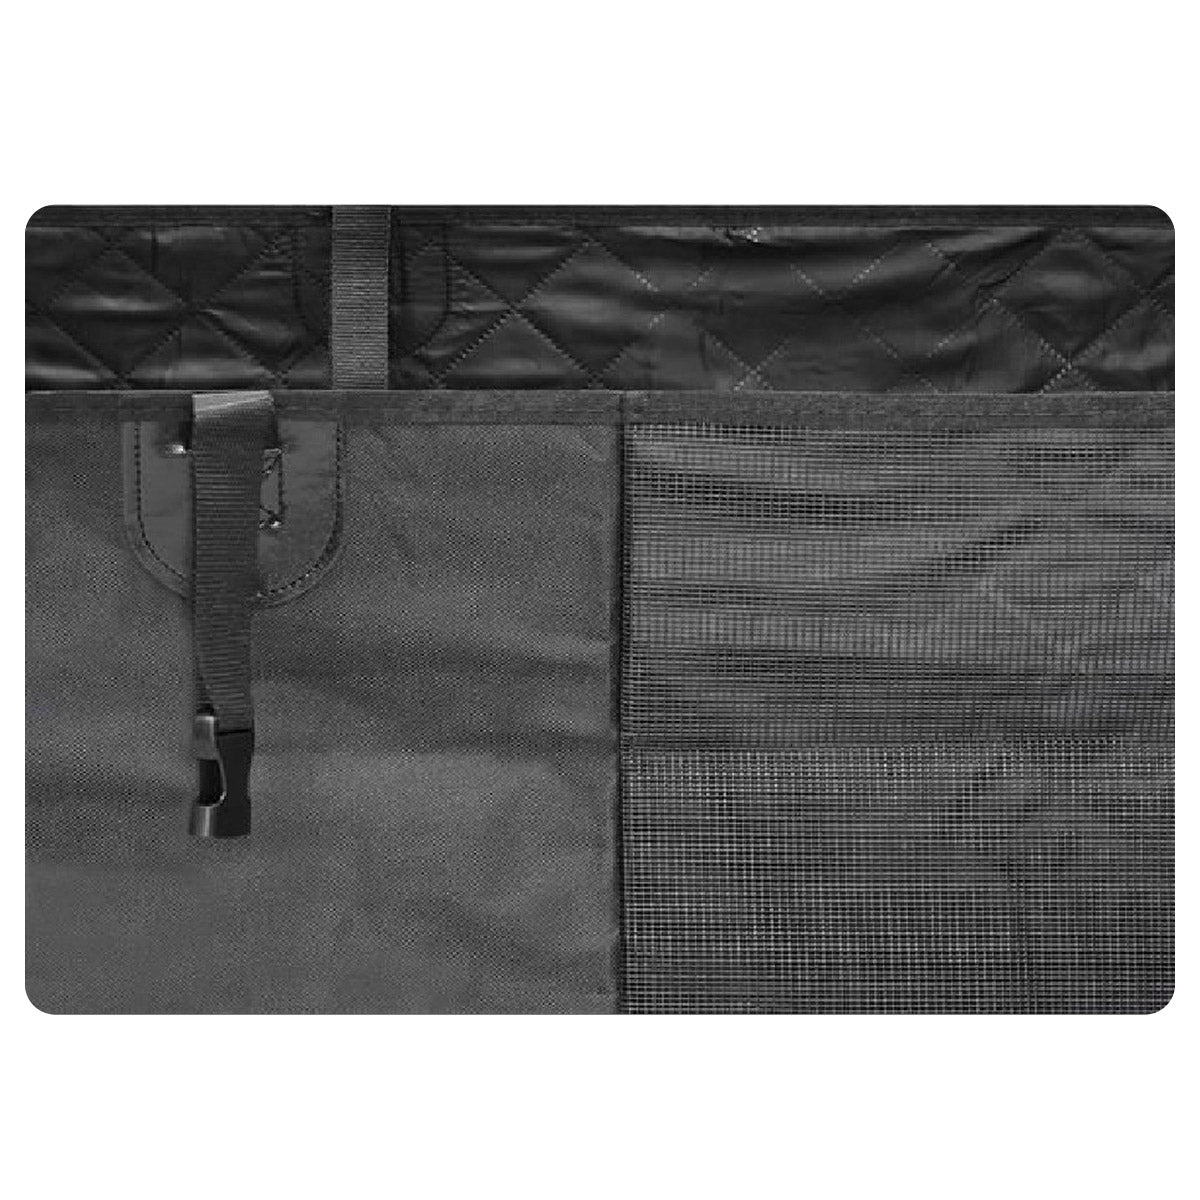 <tc>Ariko</tc> Dog Blanket - Car Blanket - Trunk Protection - 128 x 138 cm - Waterproof